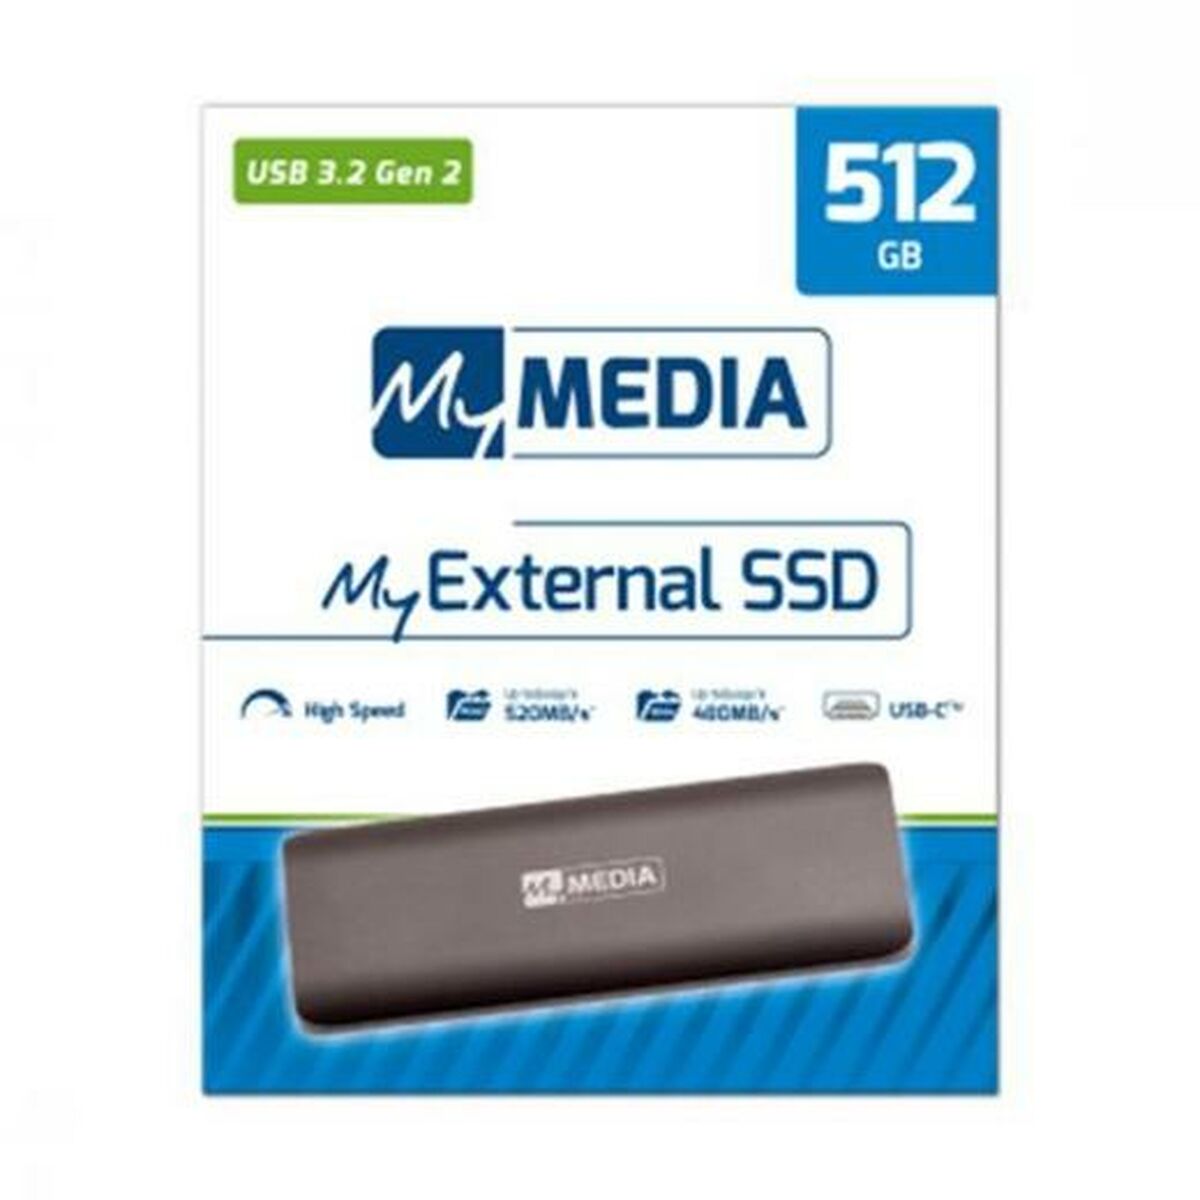 Memorie USB Verbatim My Media Negru 512 GB